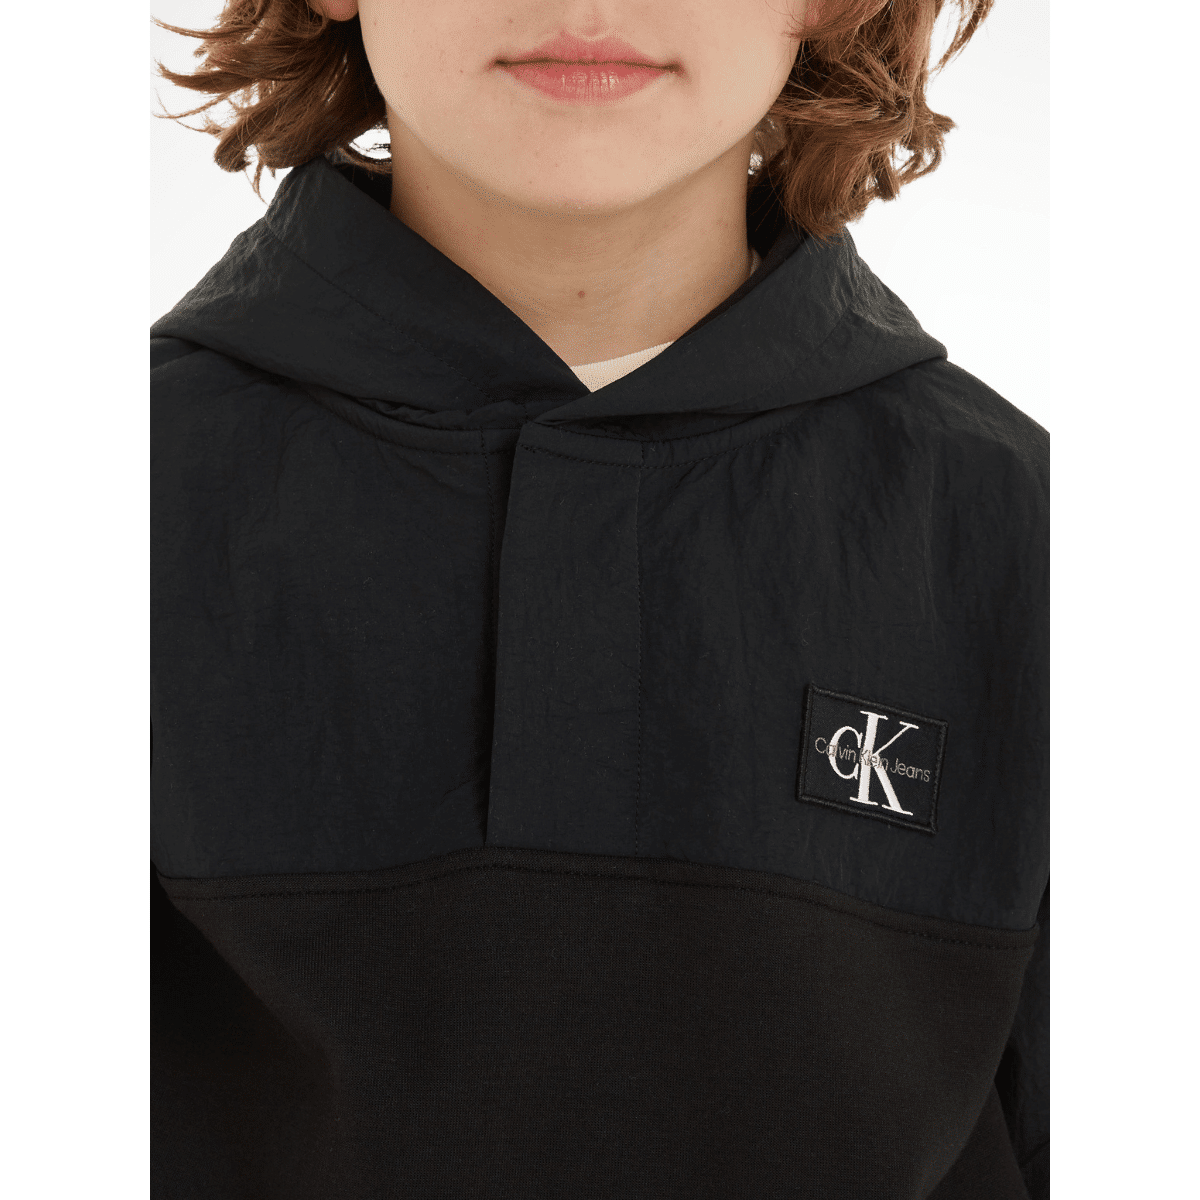 calvin klein unisex childrens black hoodie with white logo close up